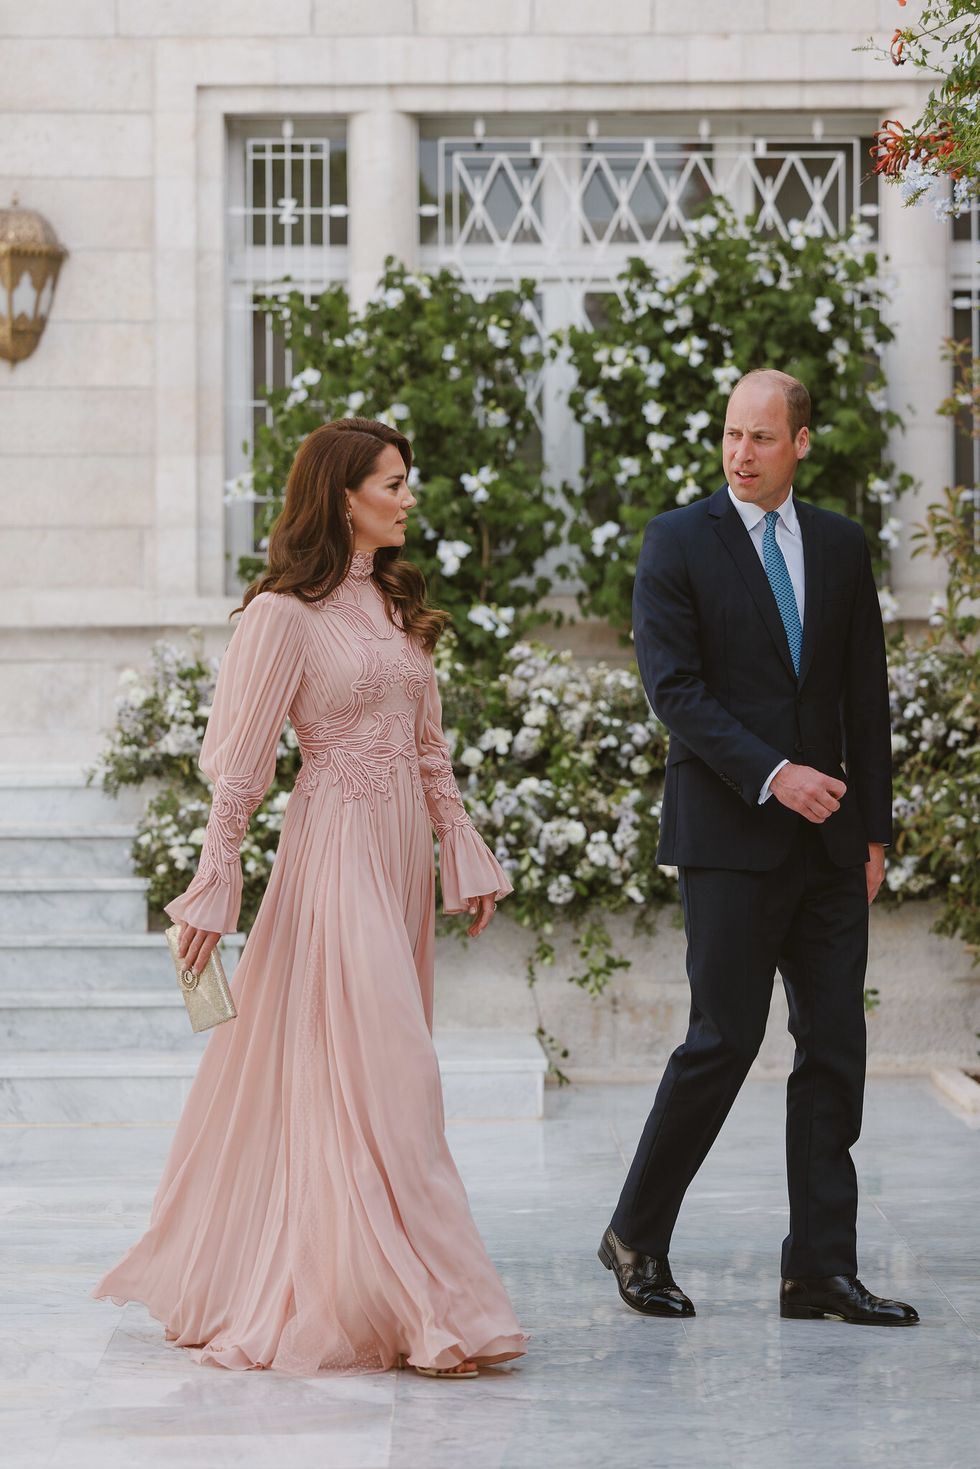 Why Was Pippa Middleton At The Jordanian Royal Wedding